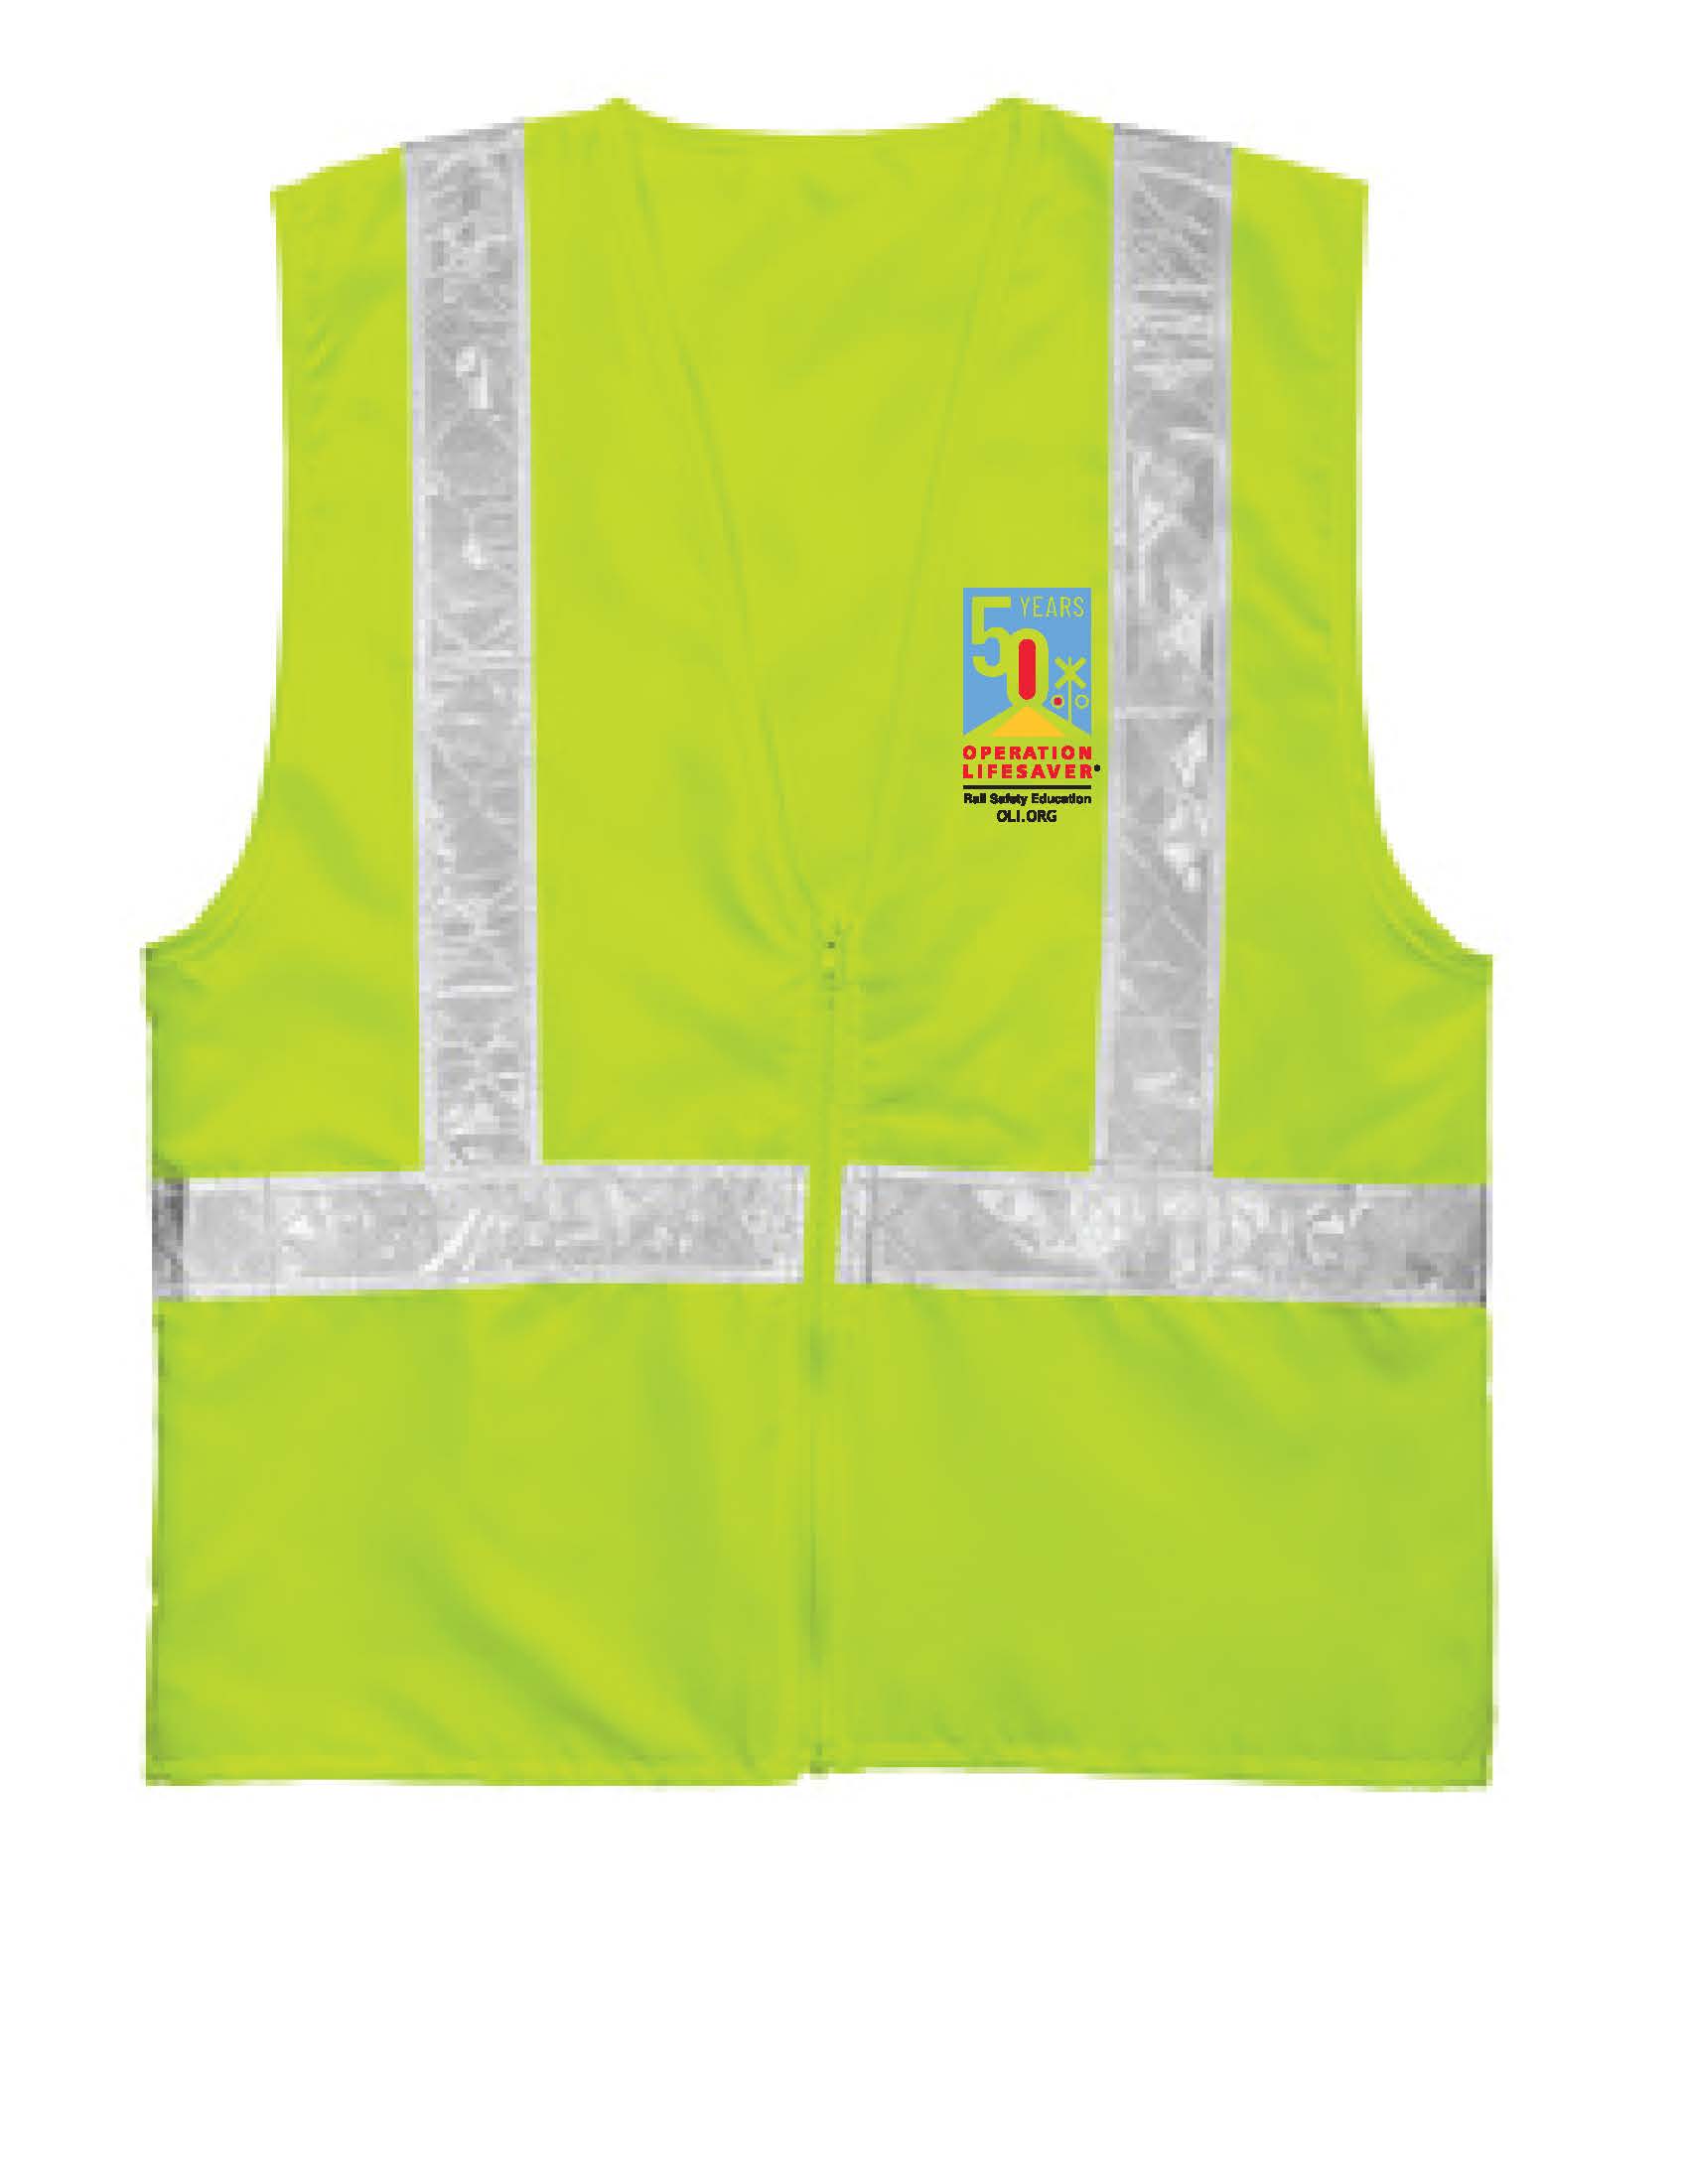 50th Anniversary Custom Safety Vest S/M